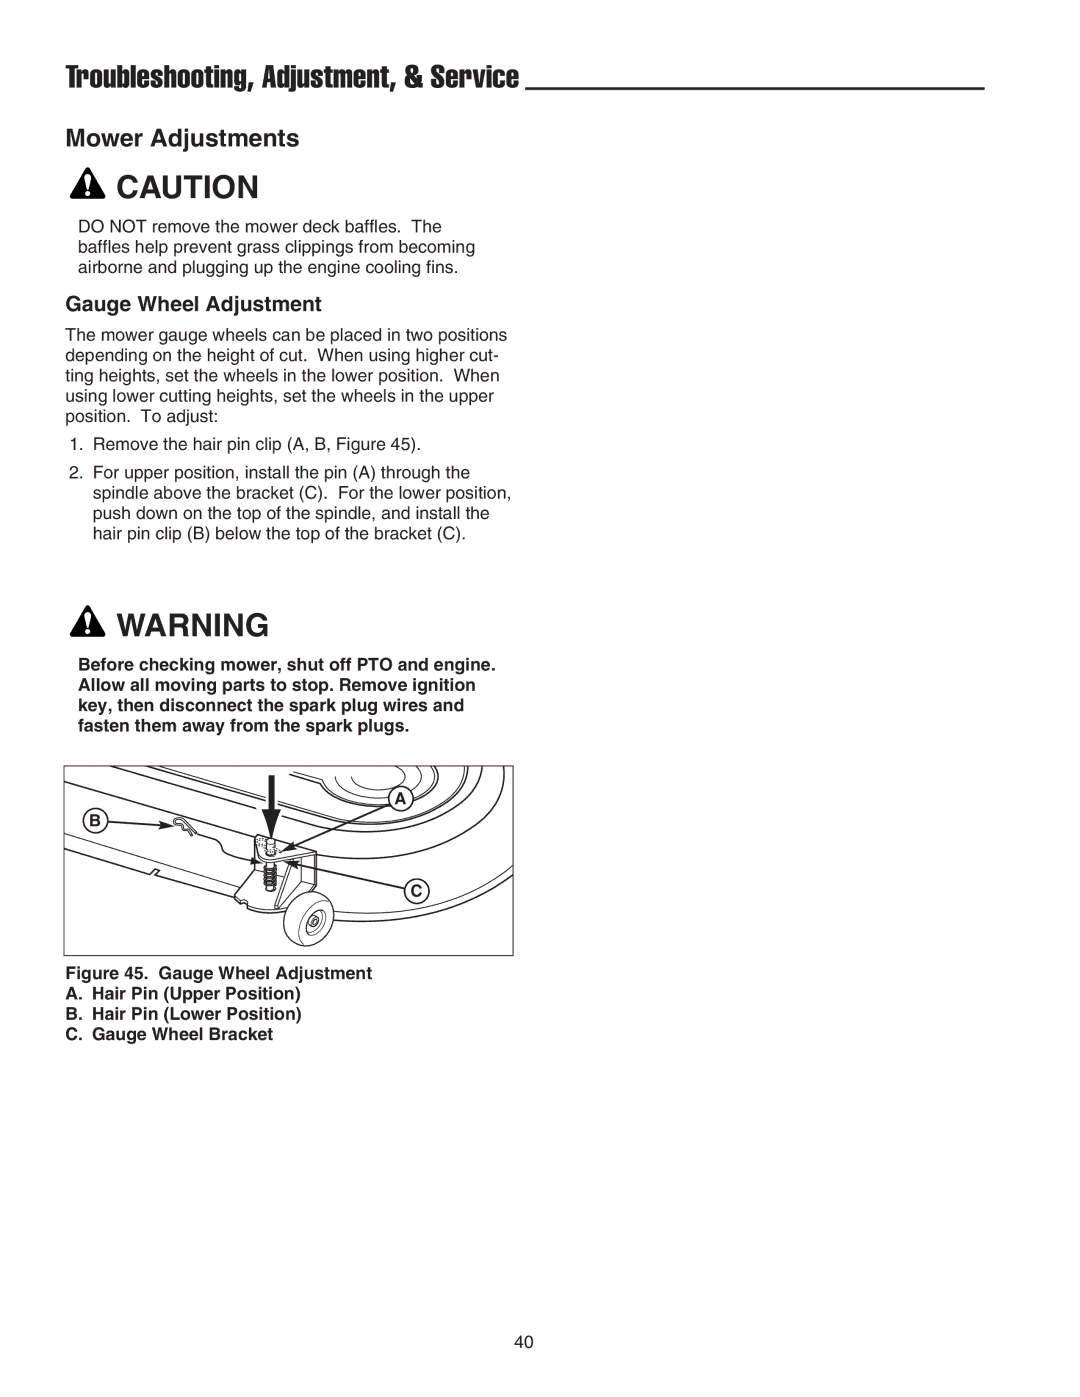 Snapper SGT27540D manual Mower Adjustments, Gauge Wheel Adjustment 